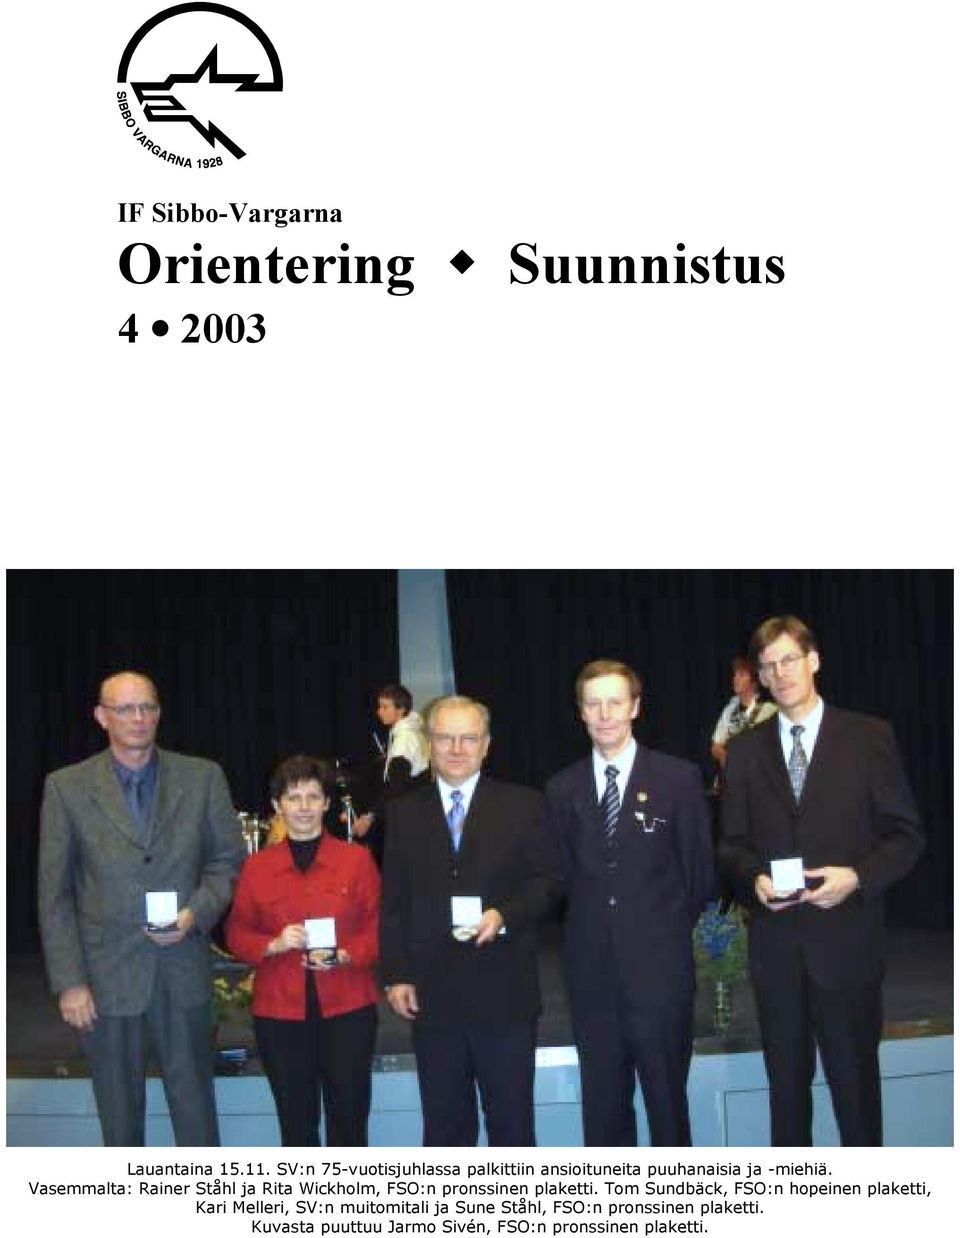 Vasemmalta: Rainer Ståhl ja Rita Wickholm, FSO:n pronssinen plaketti.